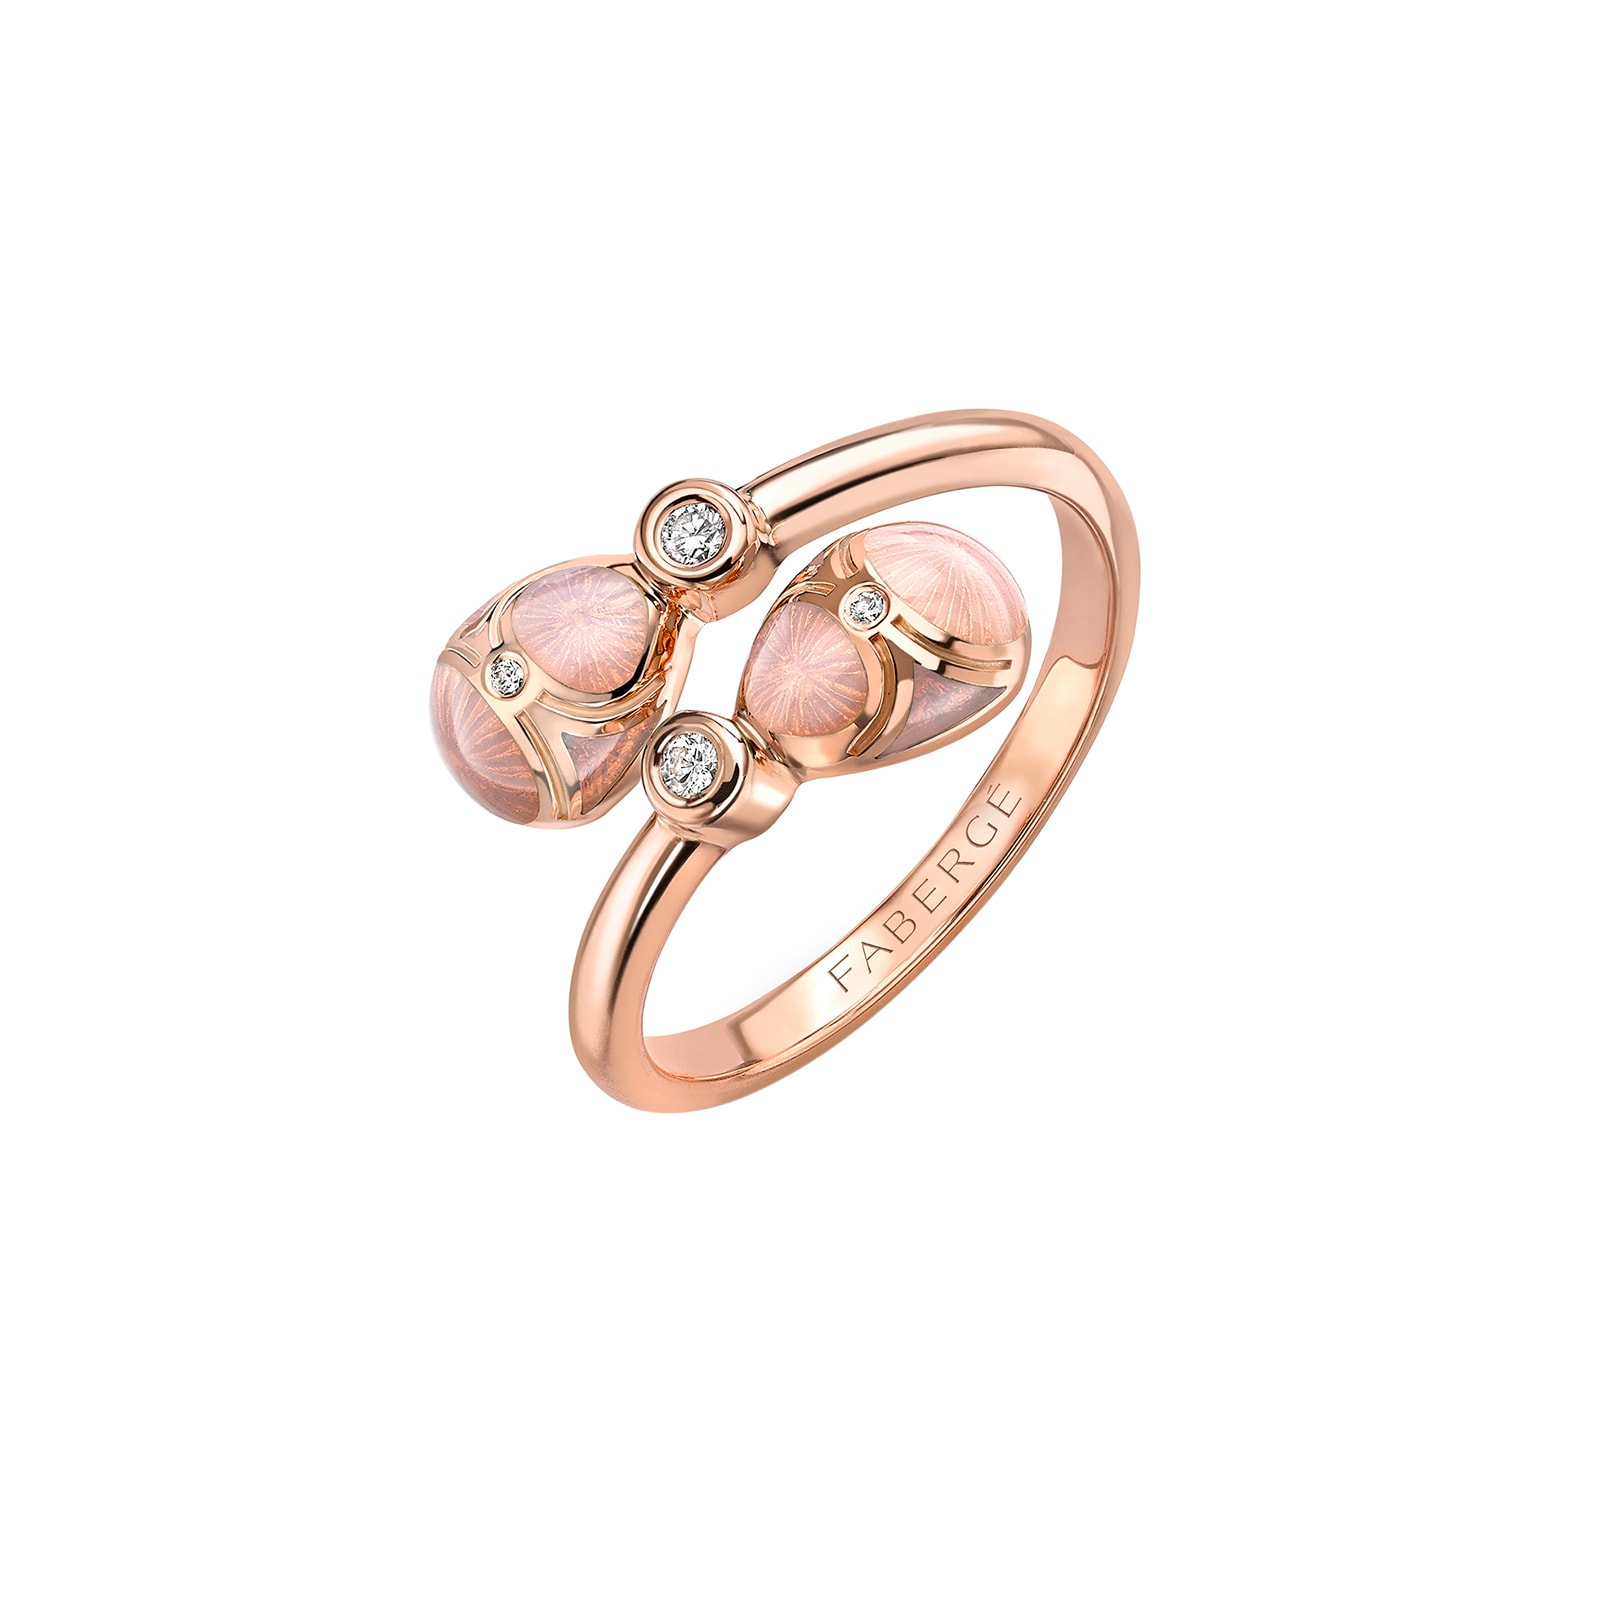 Heritage 18ct Rose Gold Diamond & Pink Enamel Crossover Ring - Ring Size O